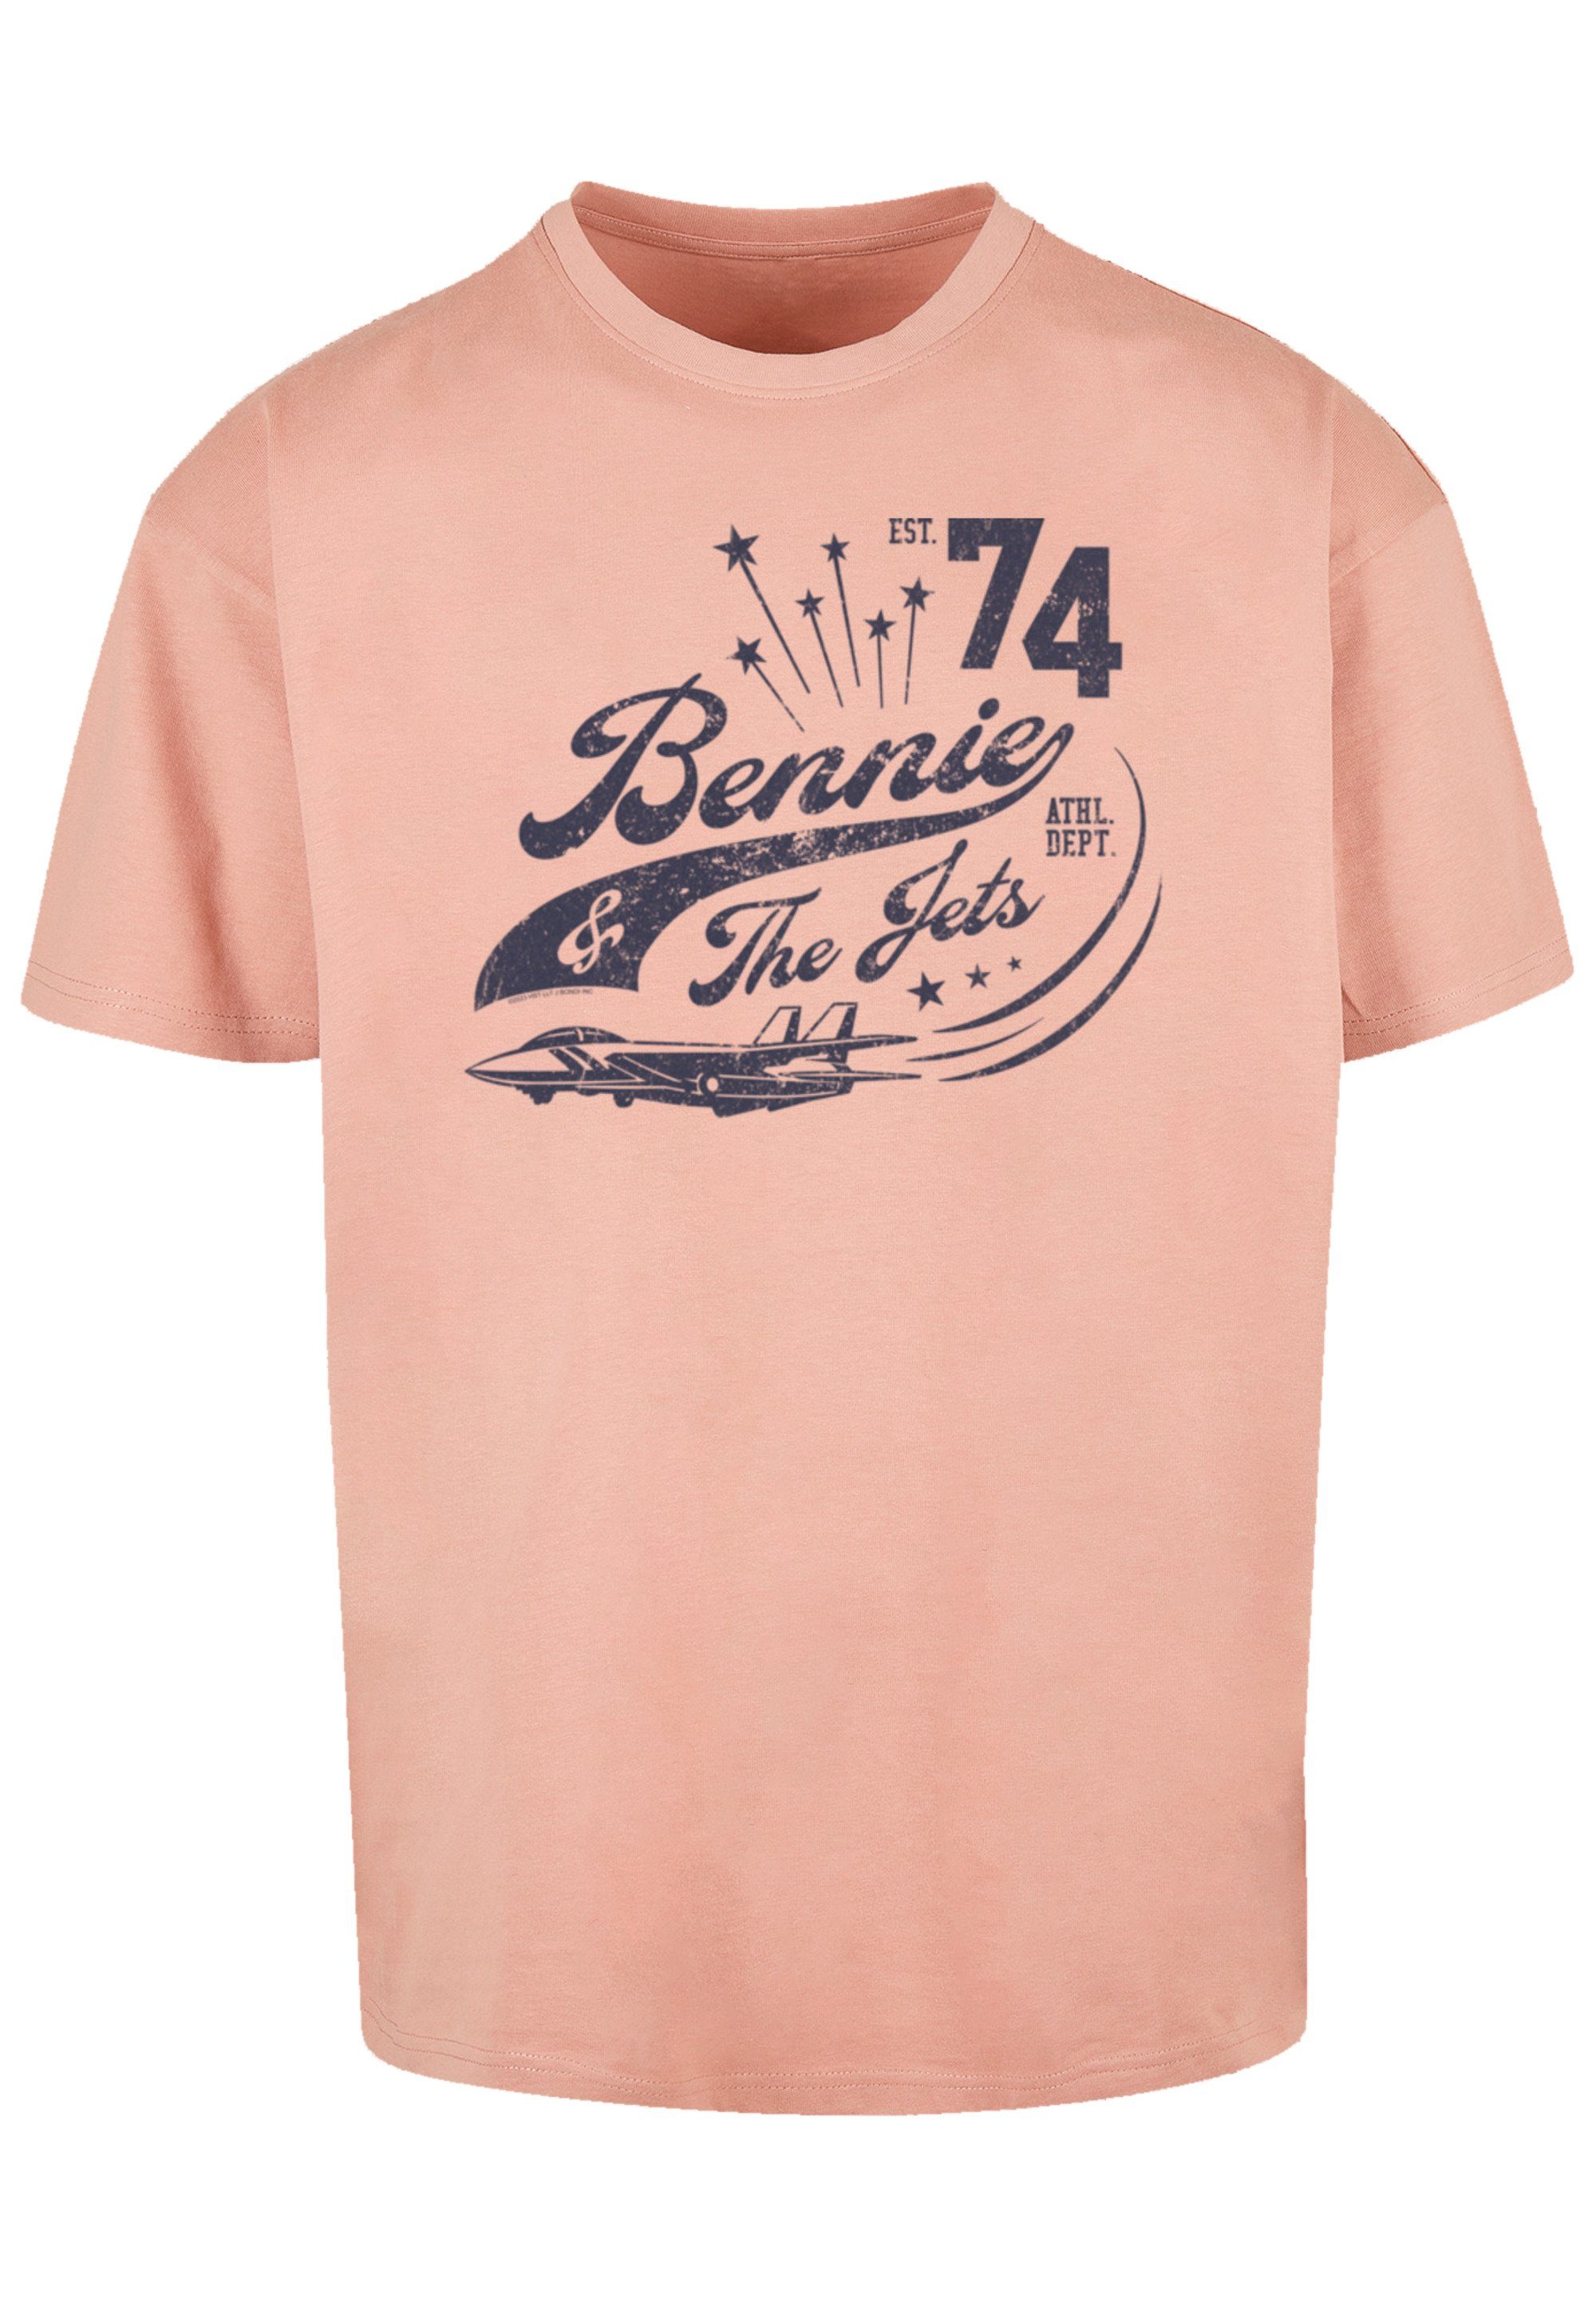 F4NT4STIC T-Shirt Elton John Band, And Bennie Logo Musik, The Jets amber